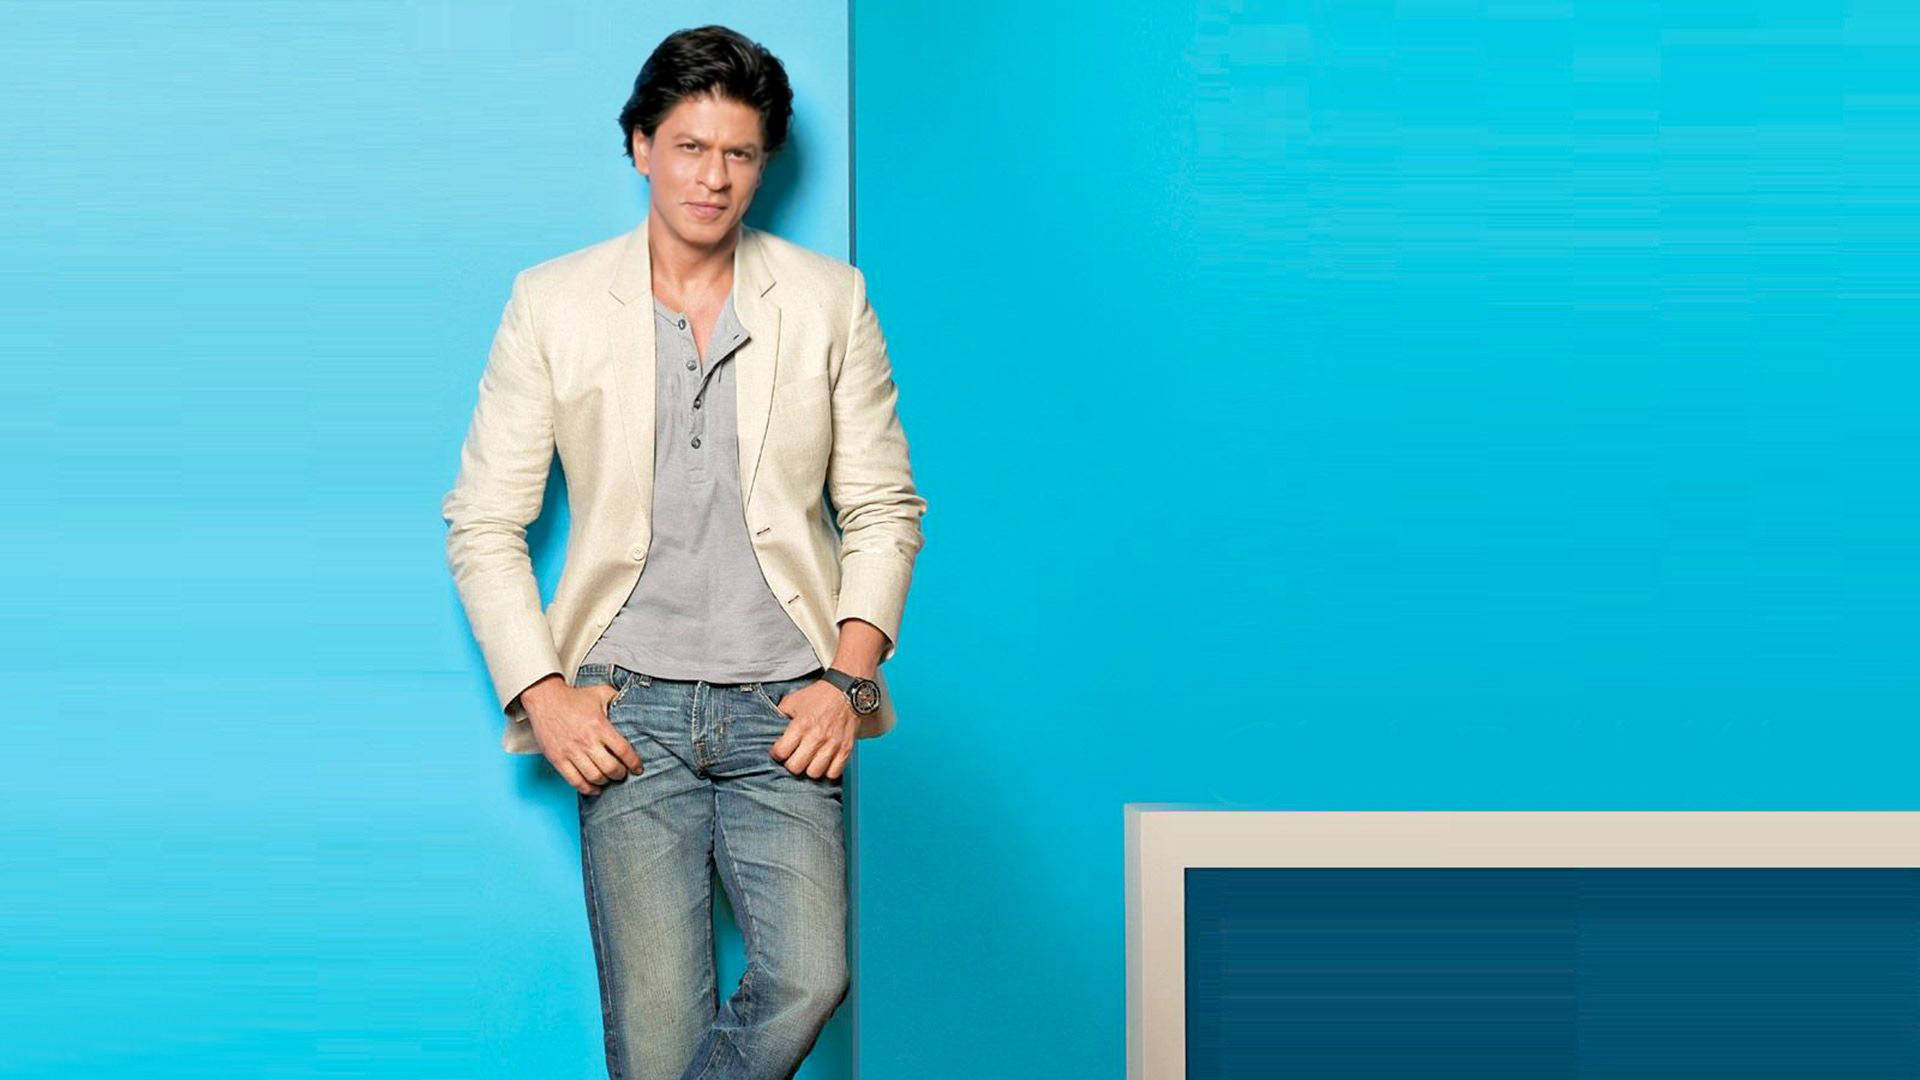 Shah Rukh Khan Blue Background Background